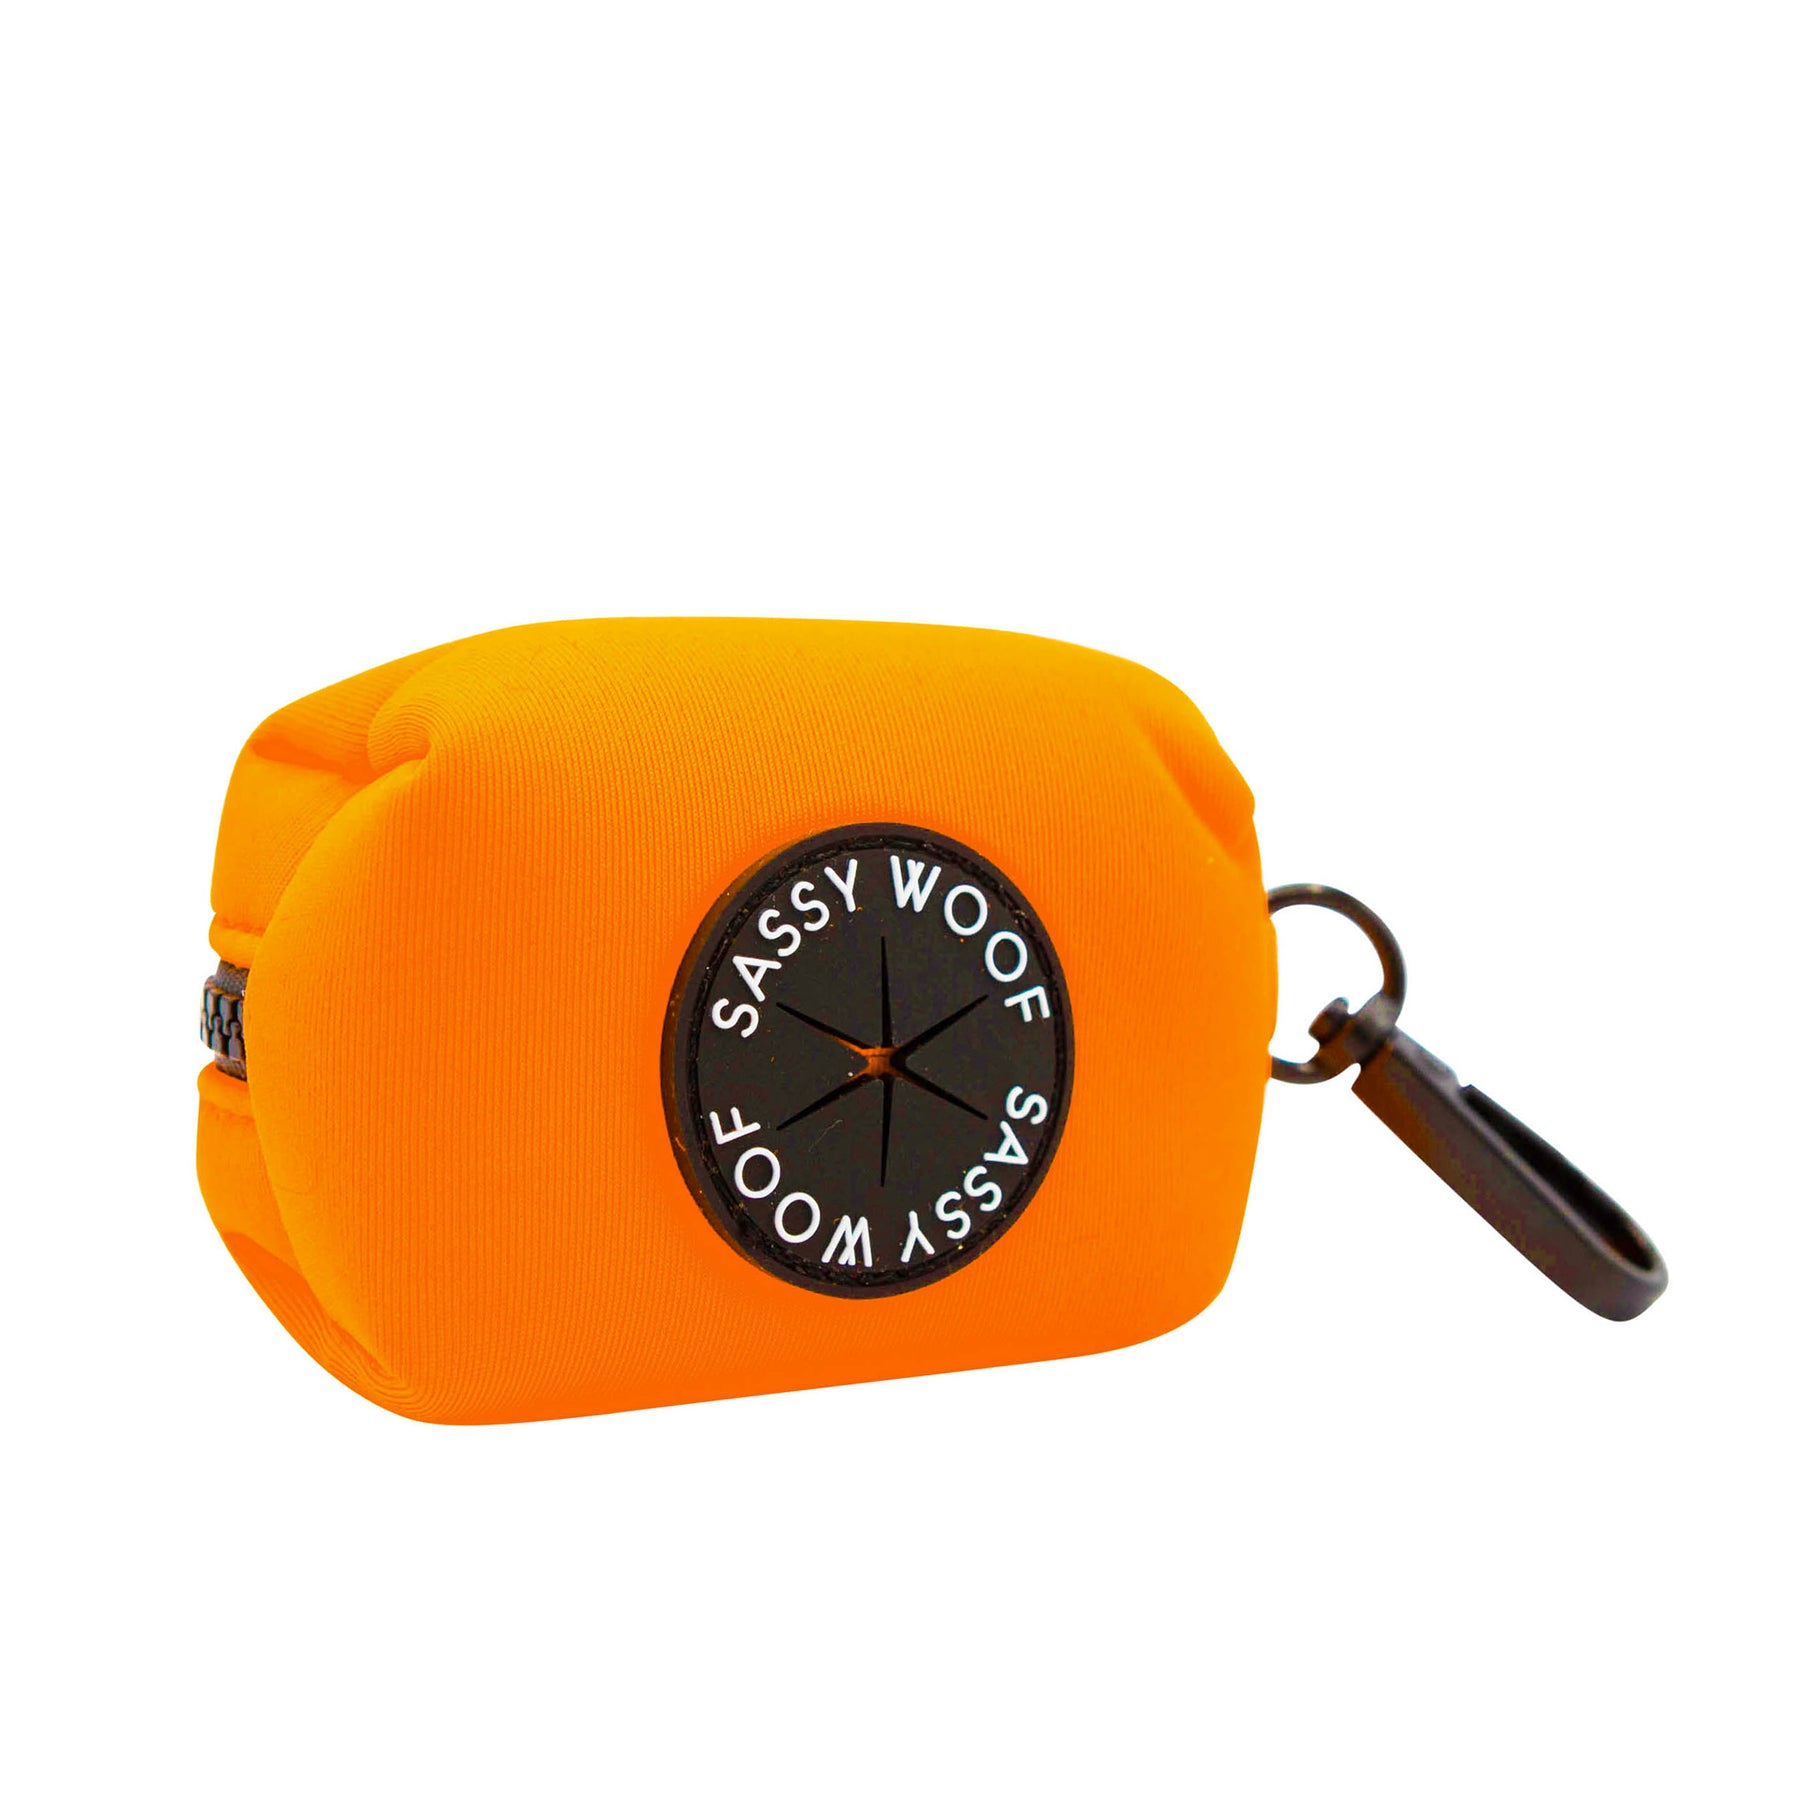 Dog Waste Bag Holder - Neon Orange